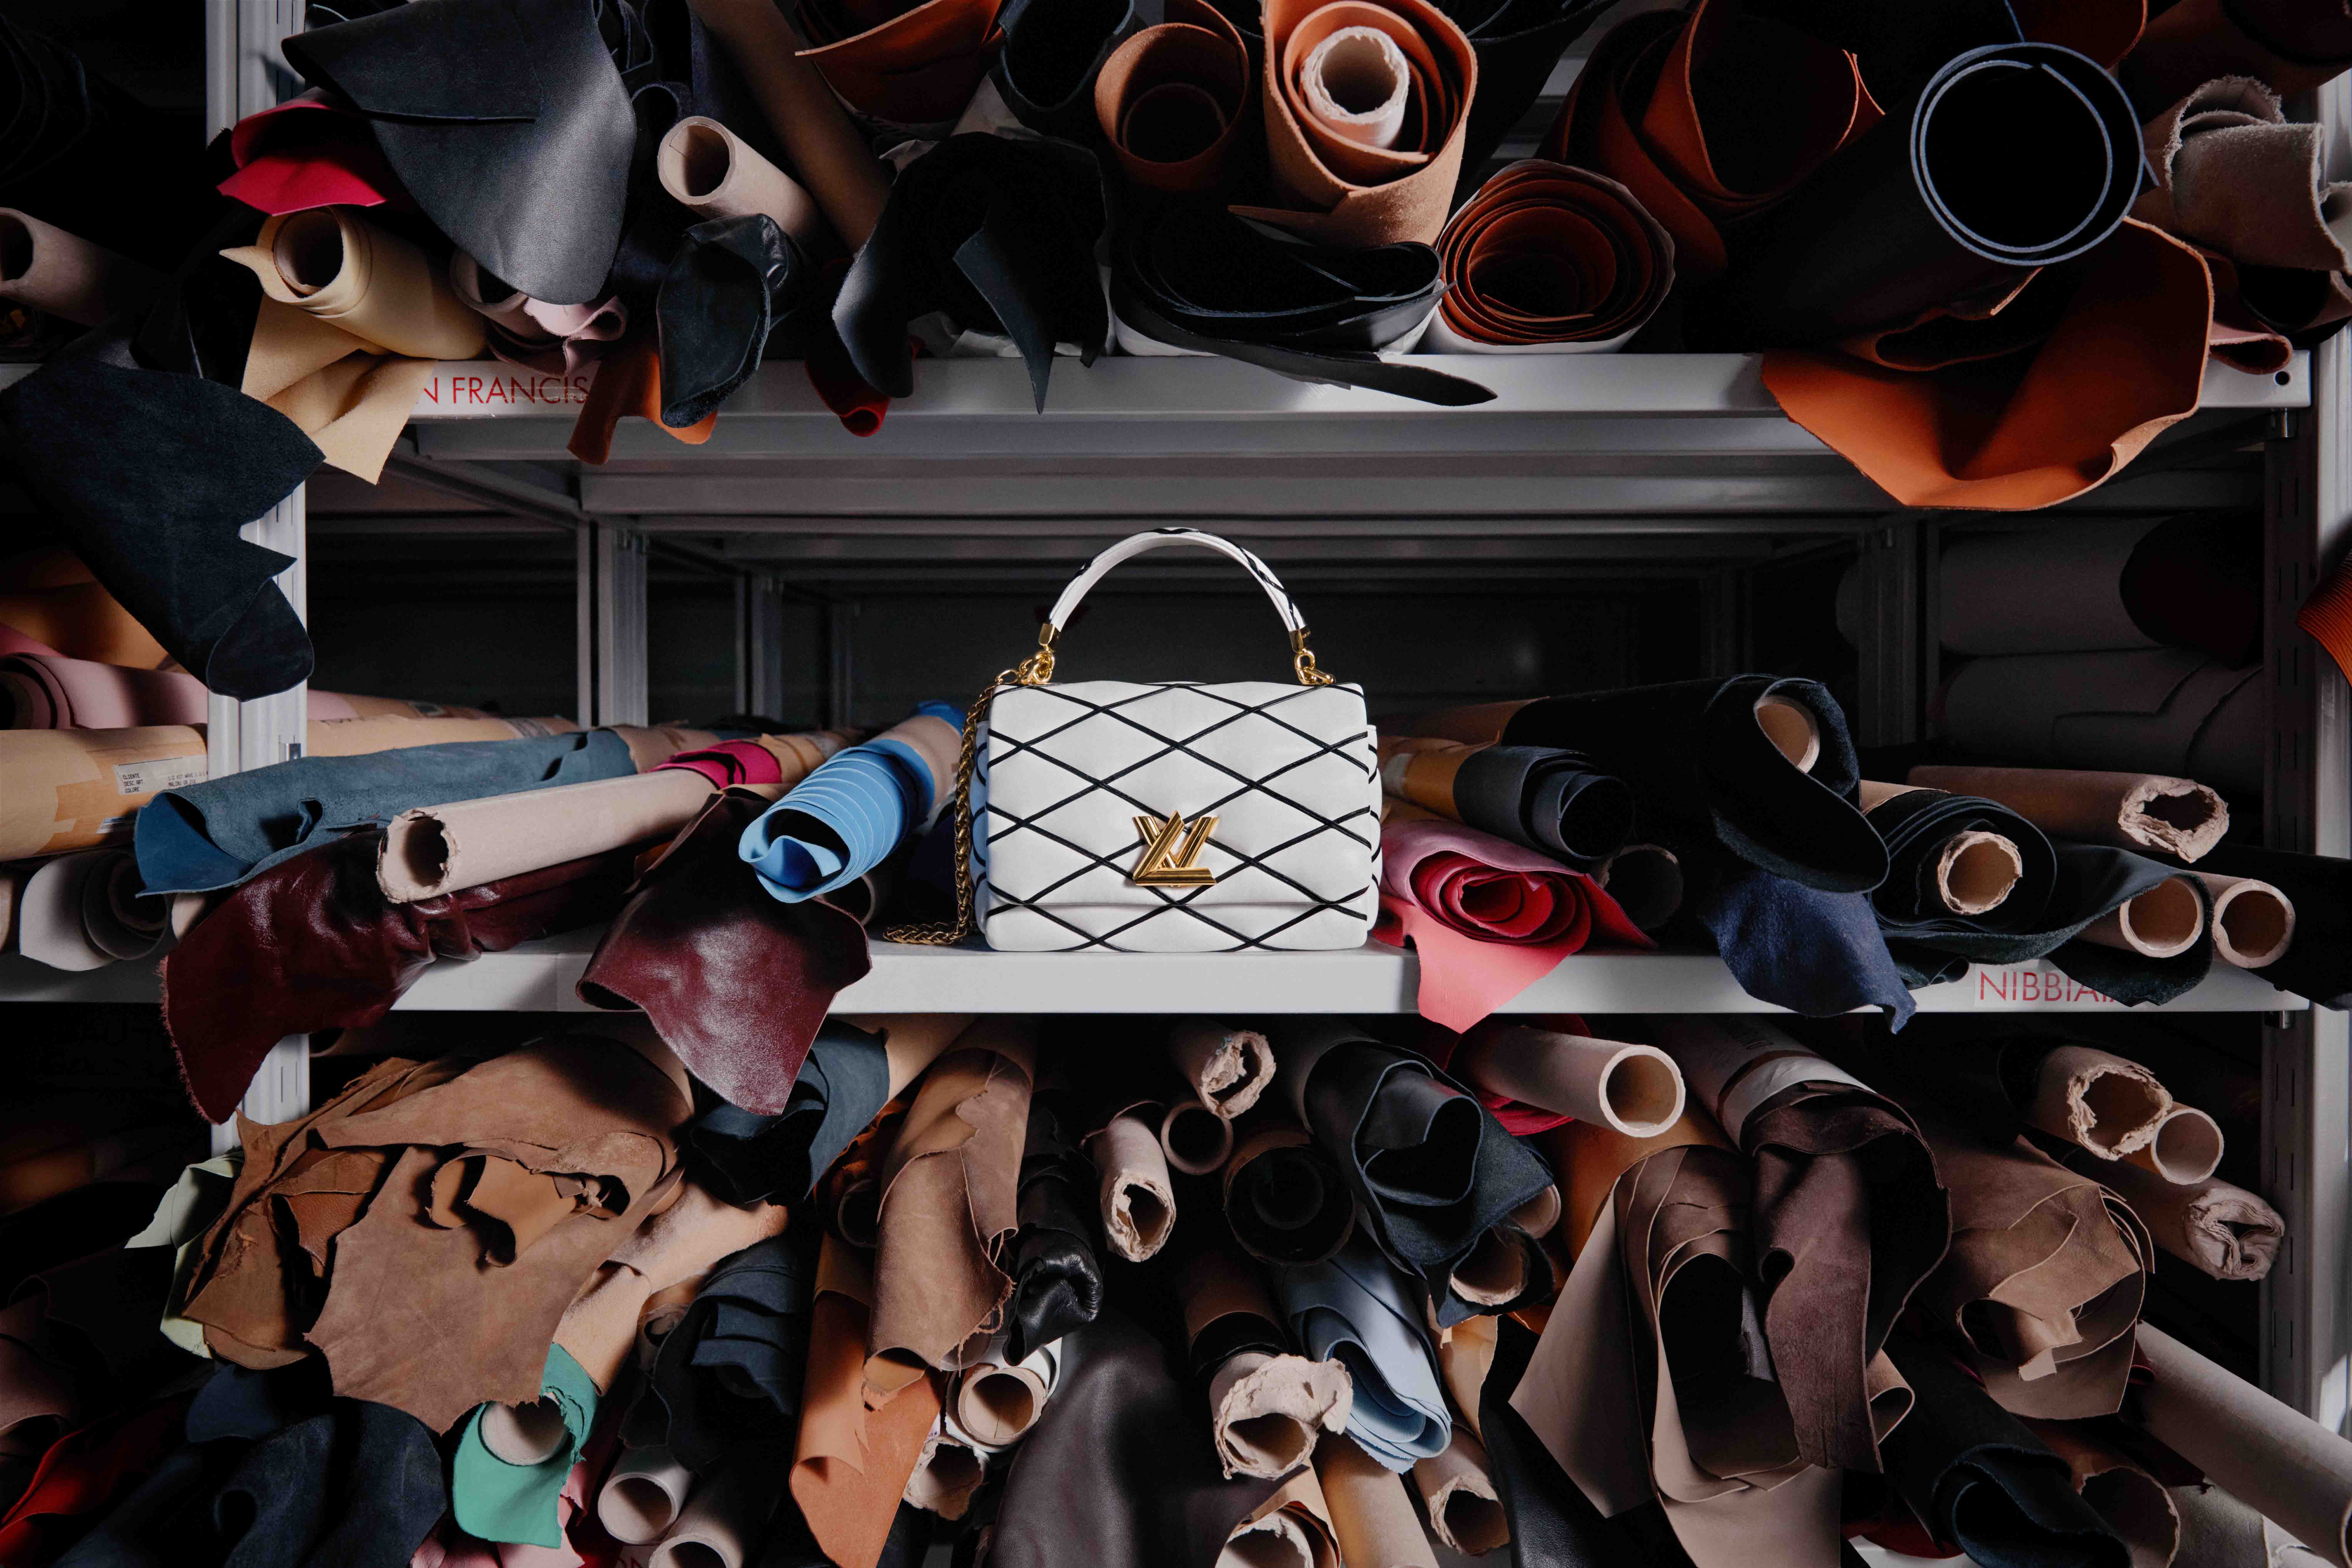 Louis Vuitton Introduces A New It Bag – The GO-14